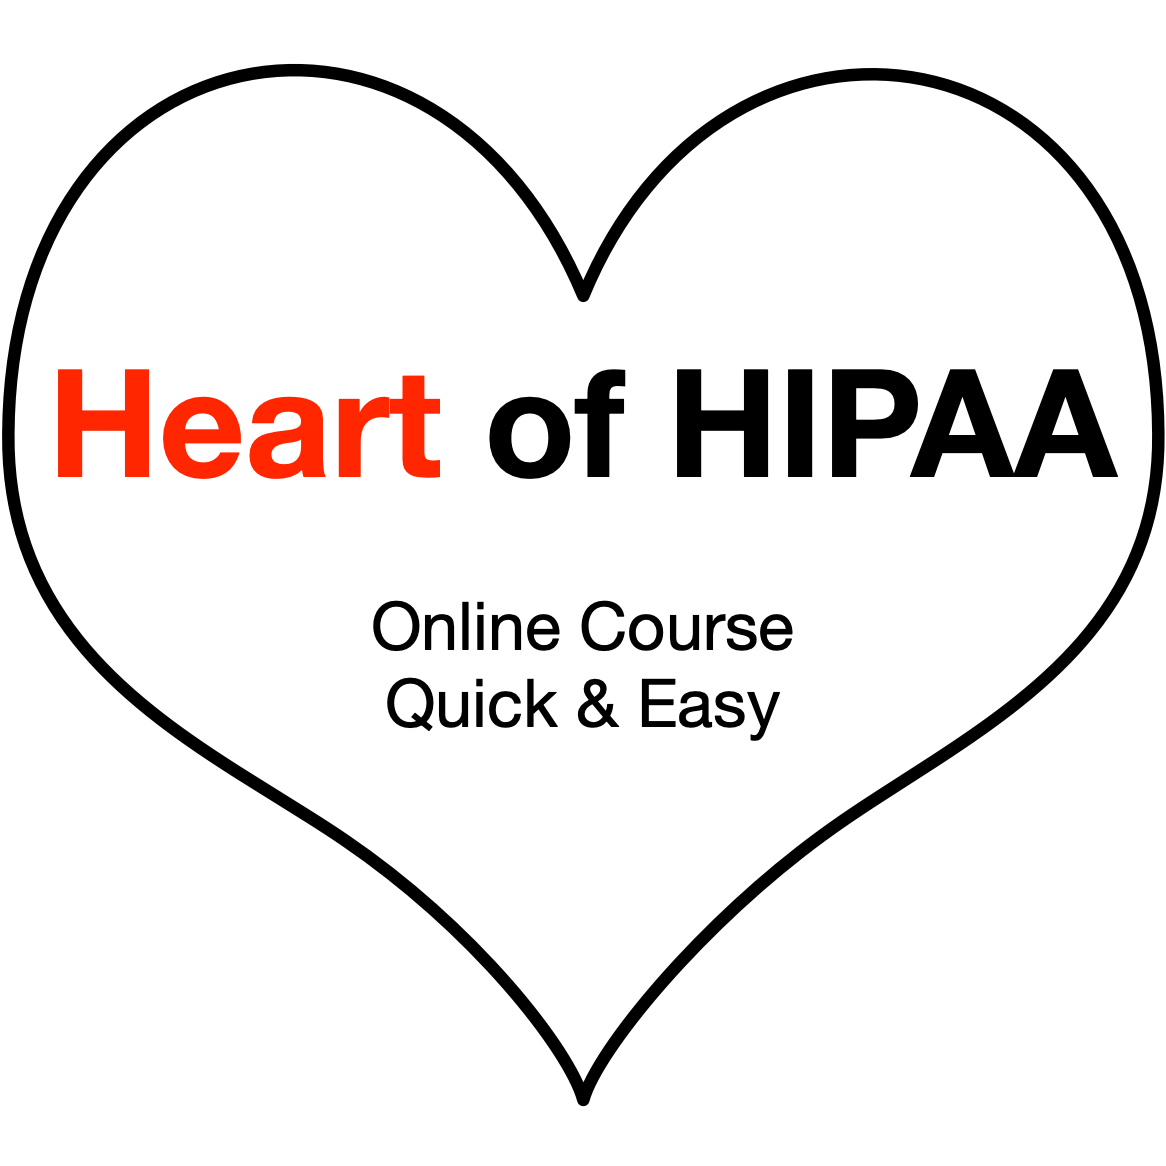 Heart of HIPAA logo